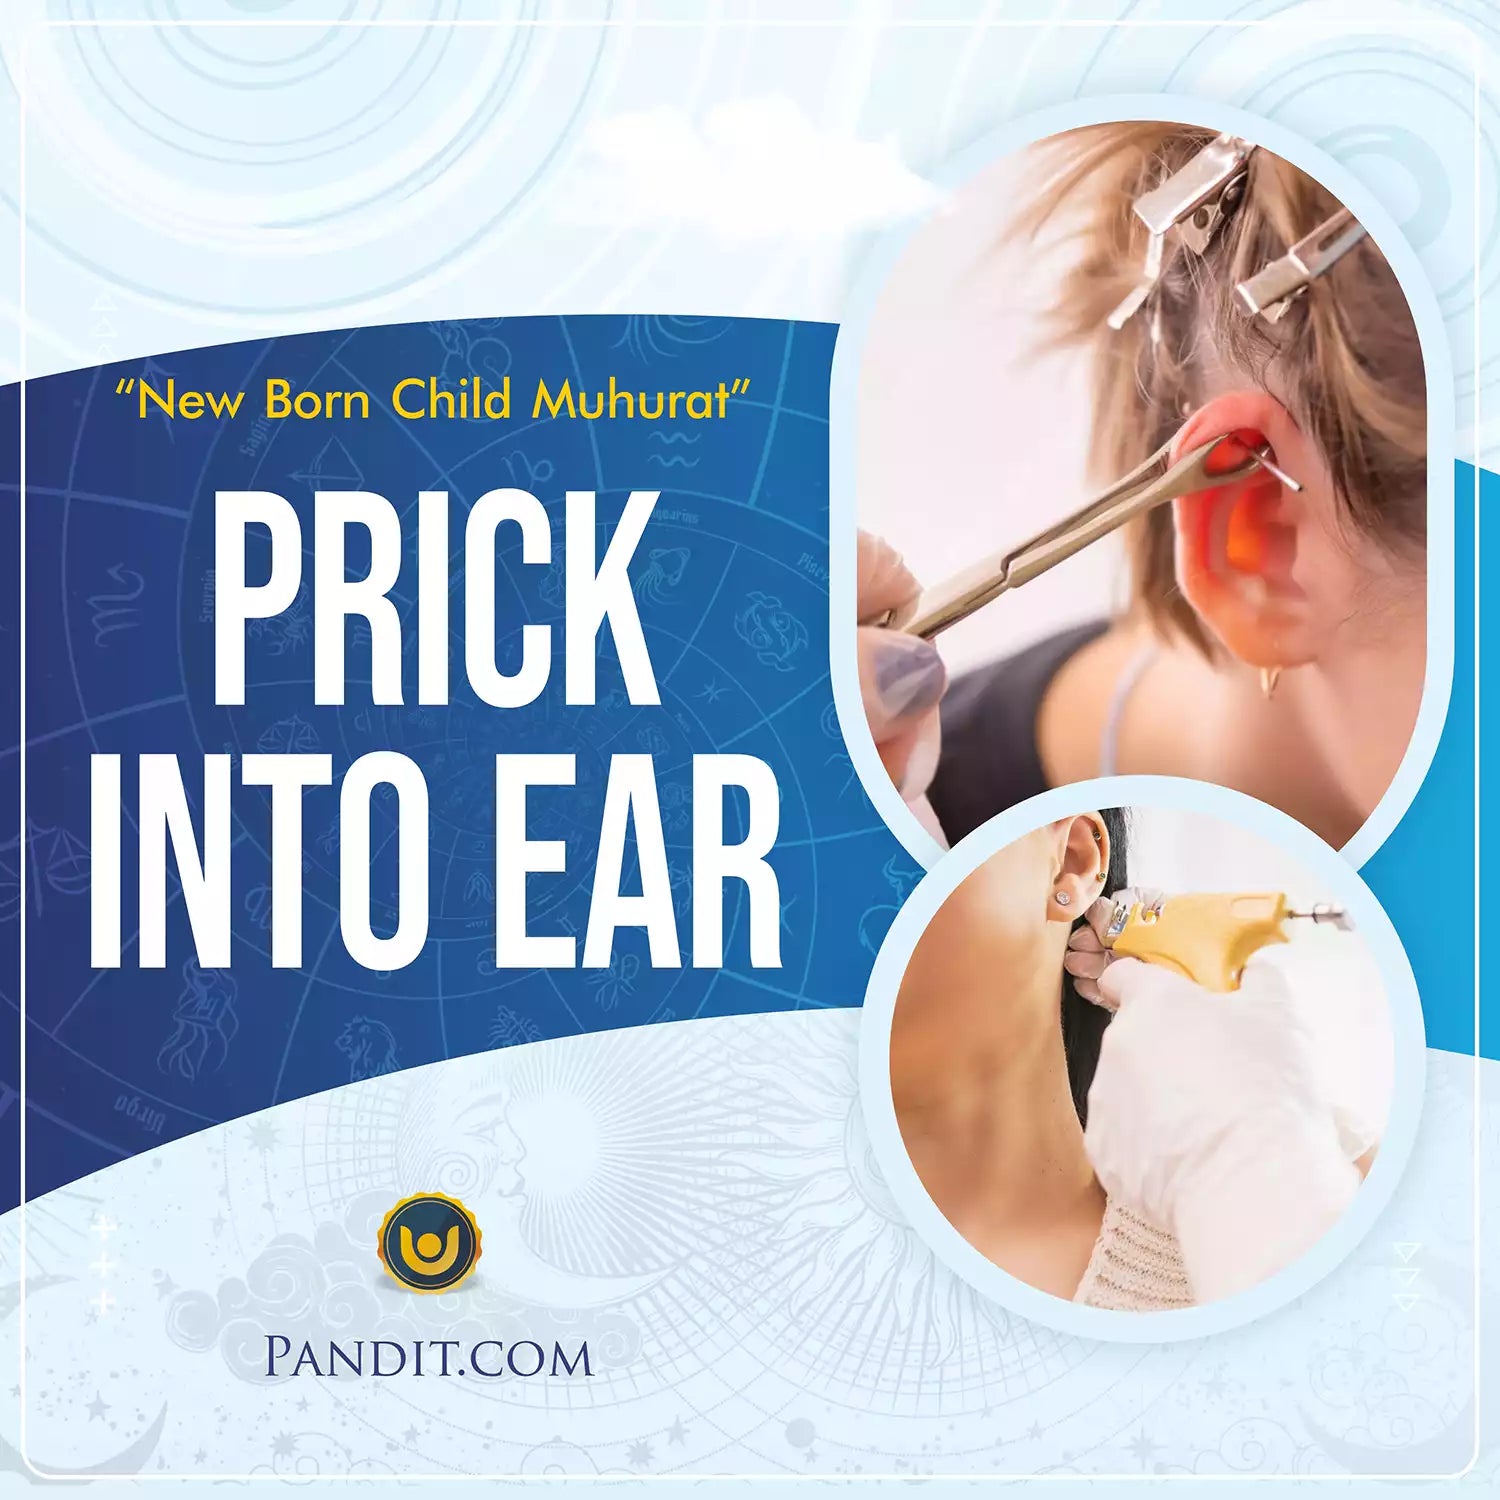 Prick into Ear